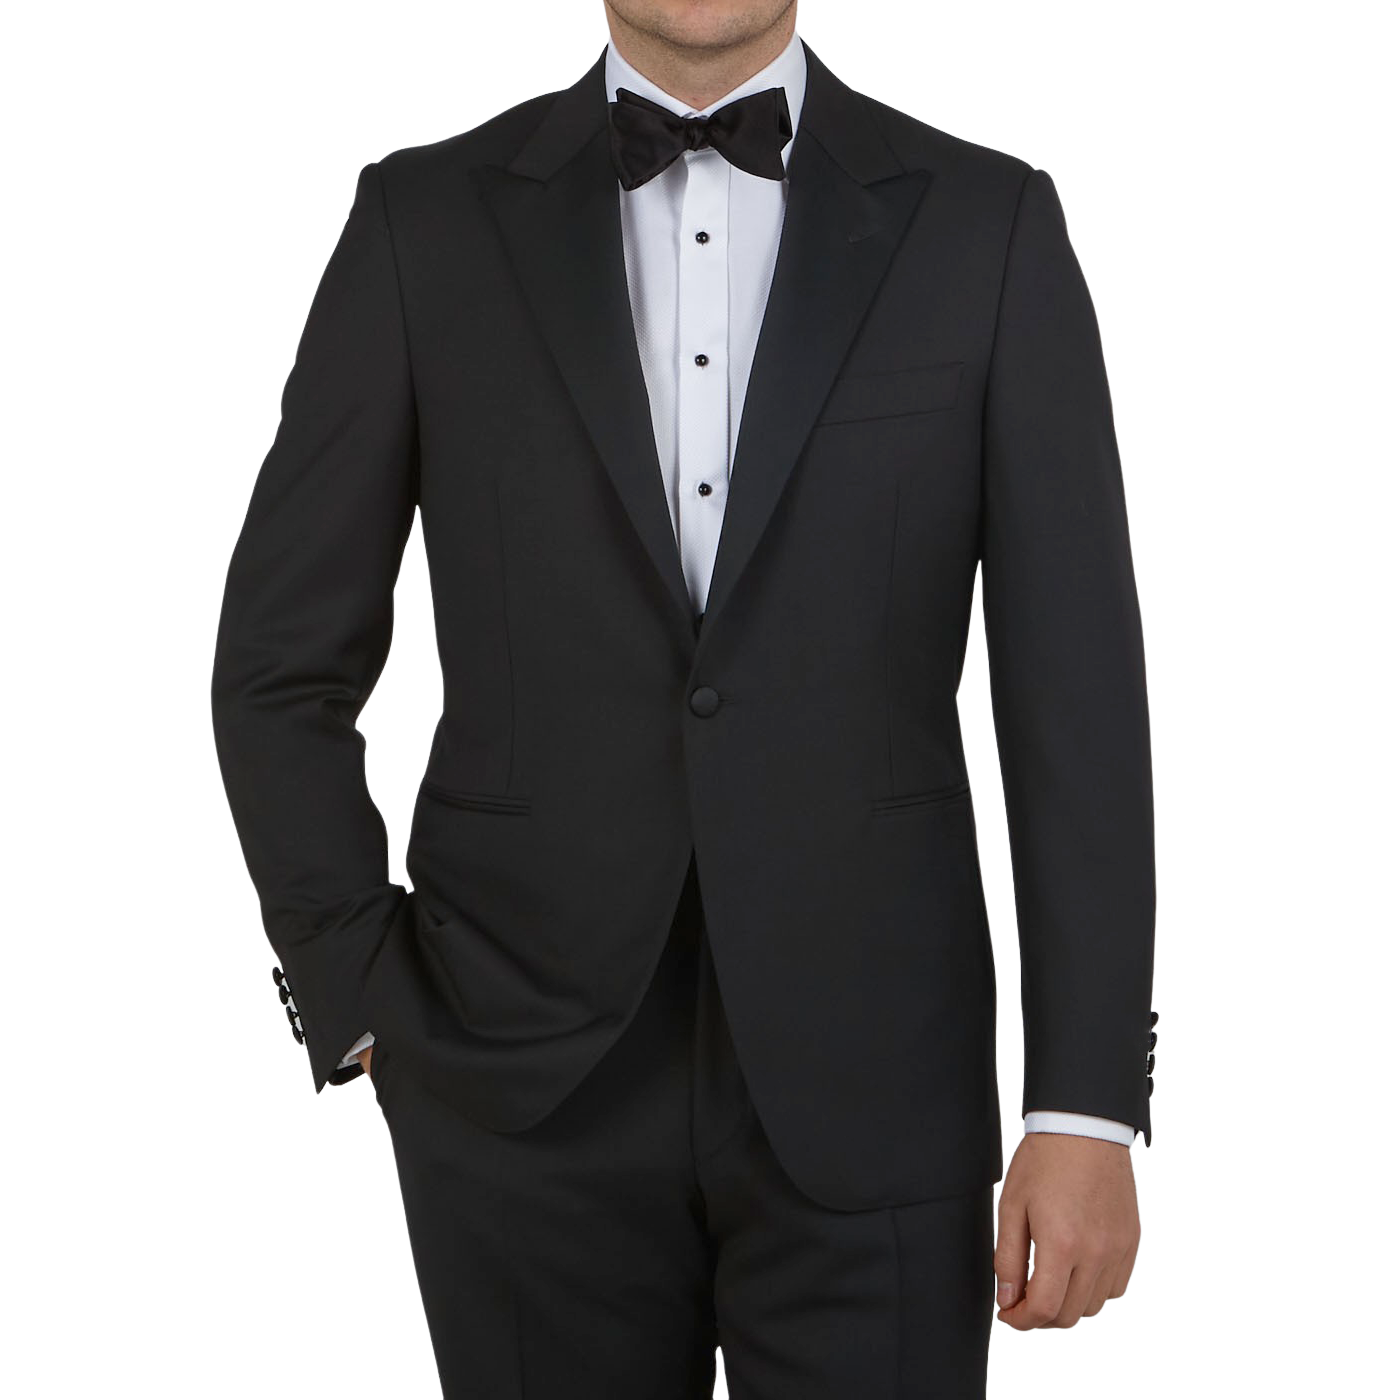 Canali Black Wool Peak Lapel Tuxedo Suit Front1